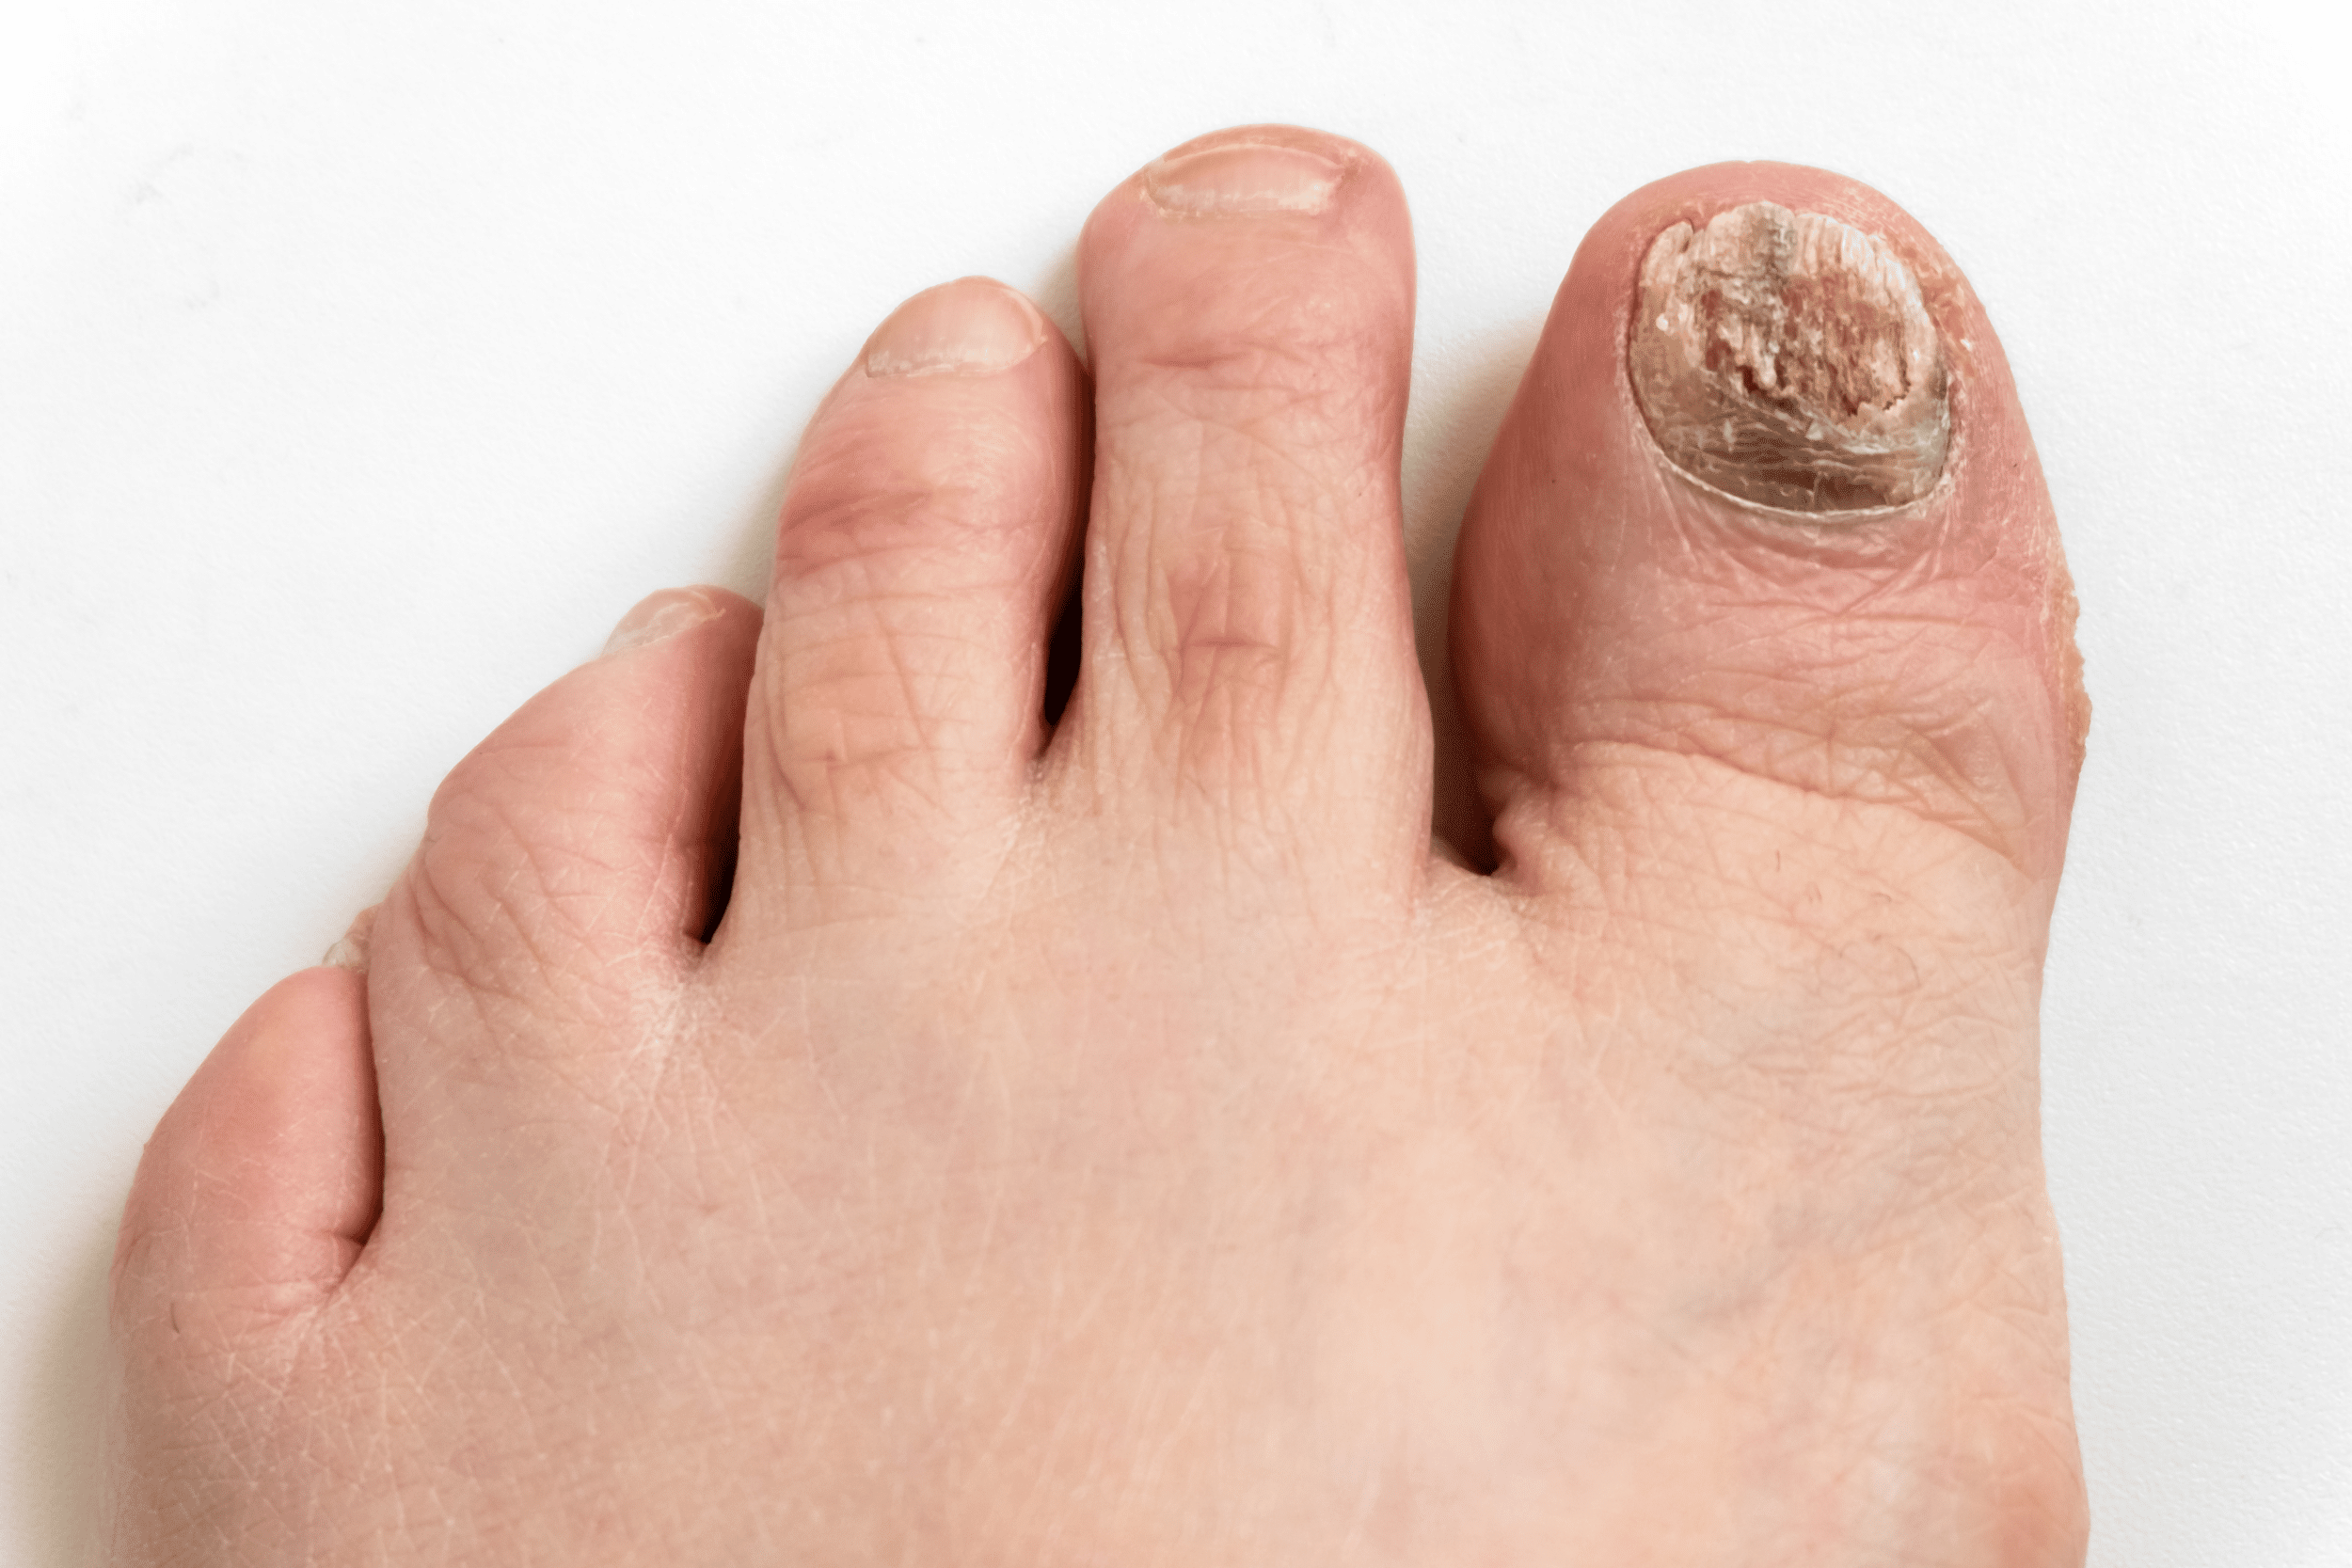 toenail fungus on patient's big toe